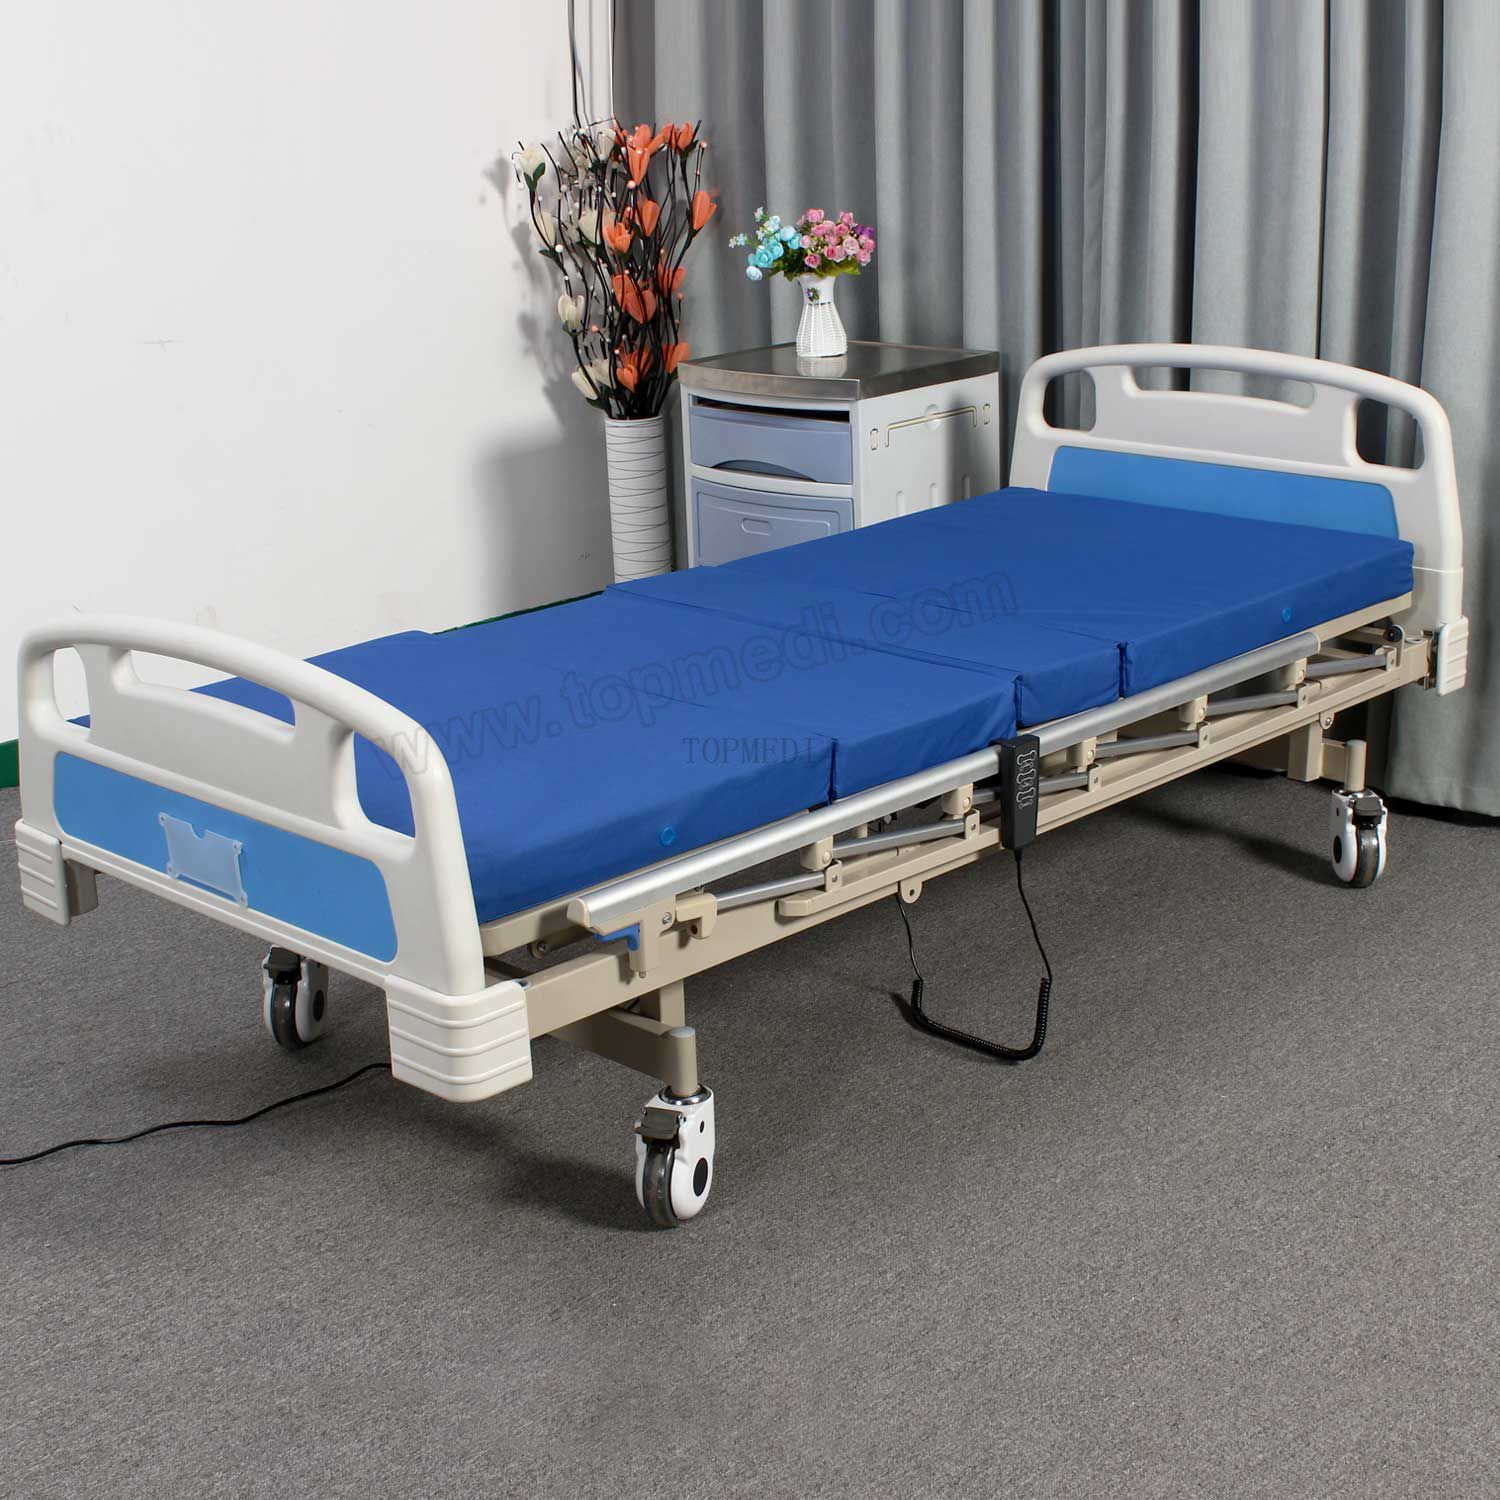 Modular Hospital Bed Design Concept